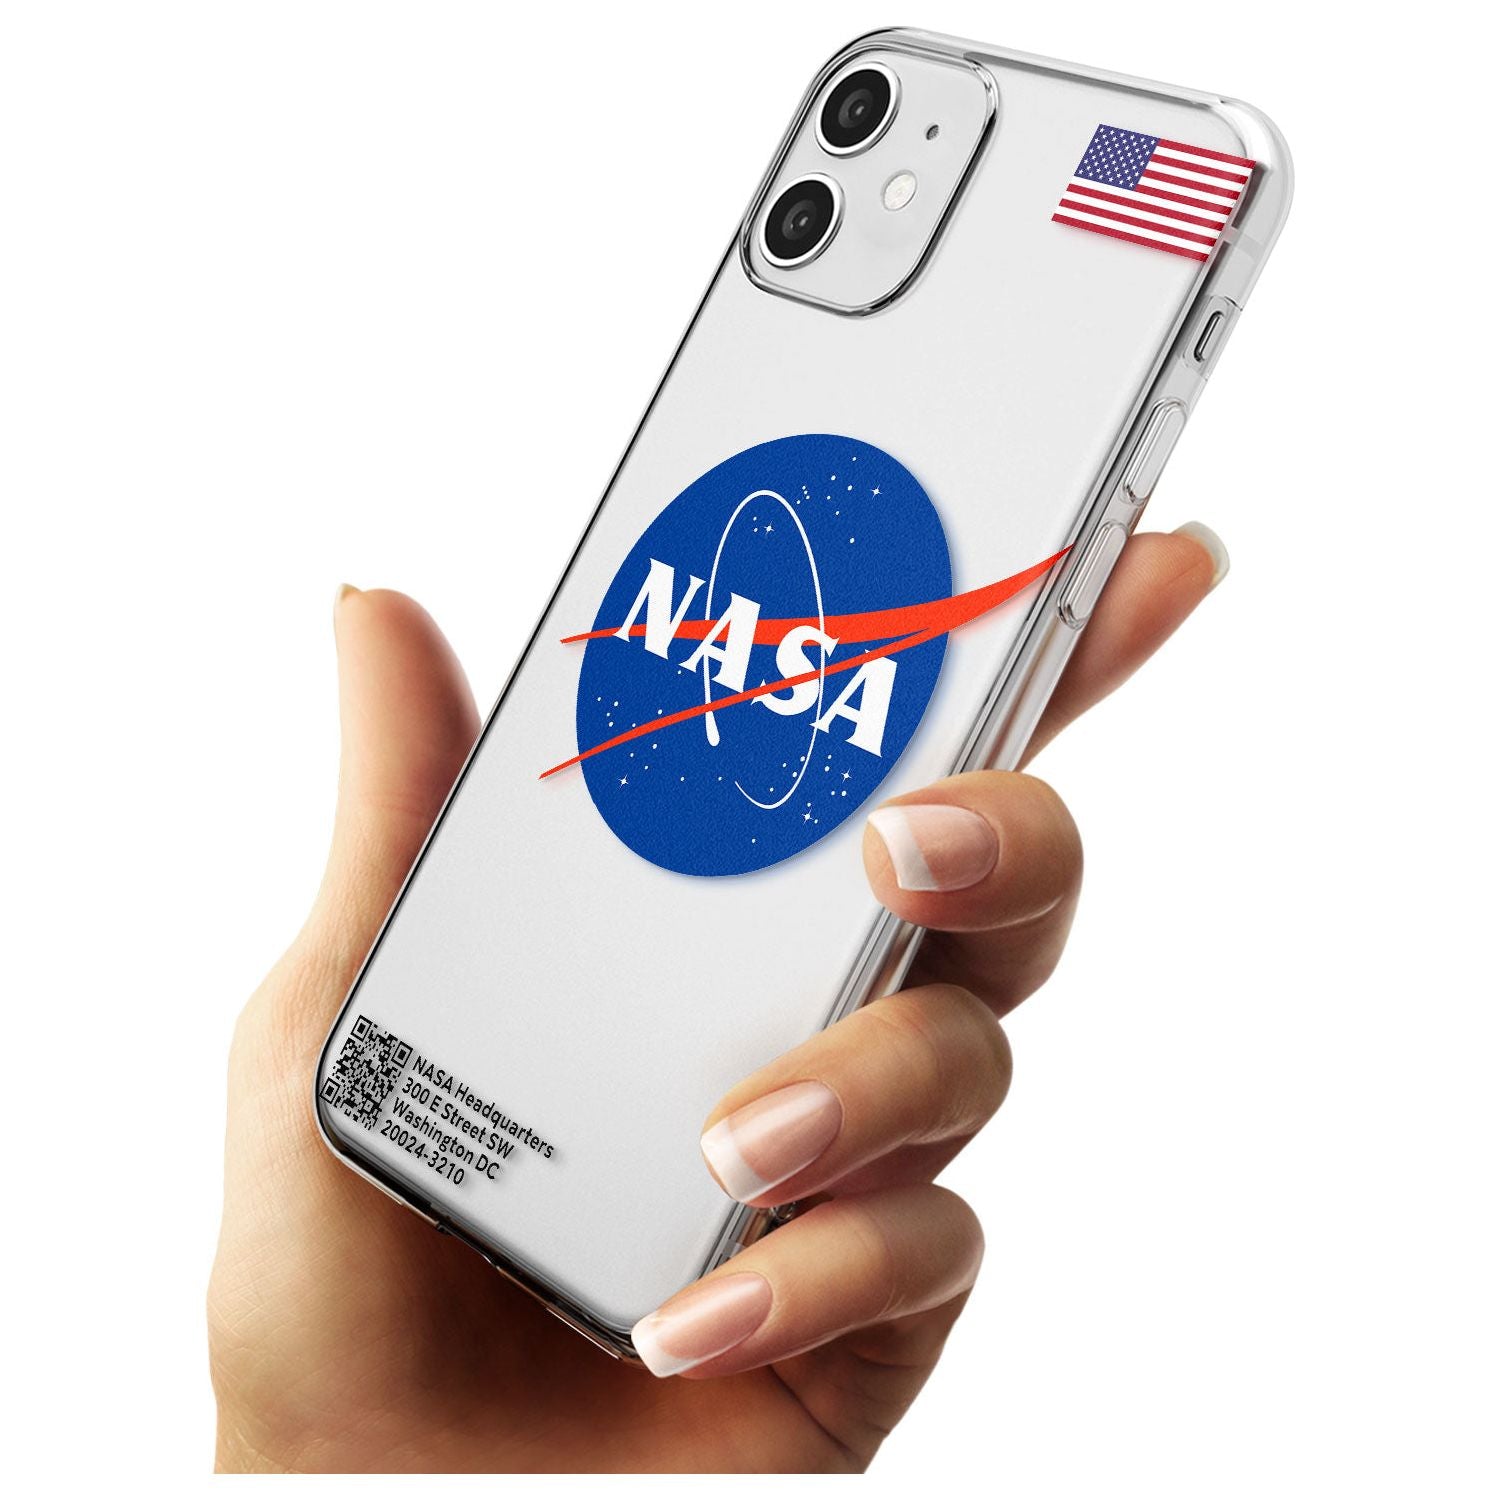 NASA Meatball Slim TPU Phone Case for iPhone 11